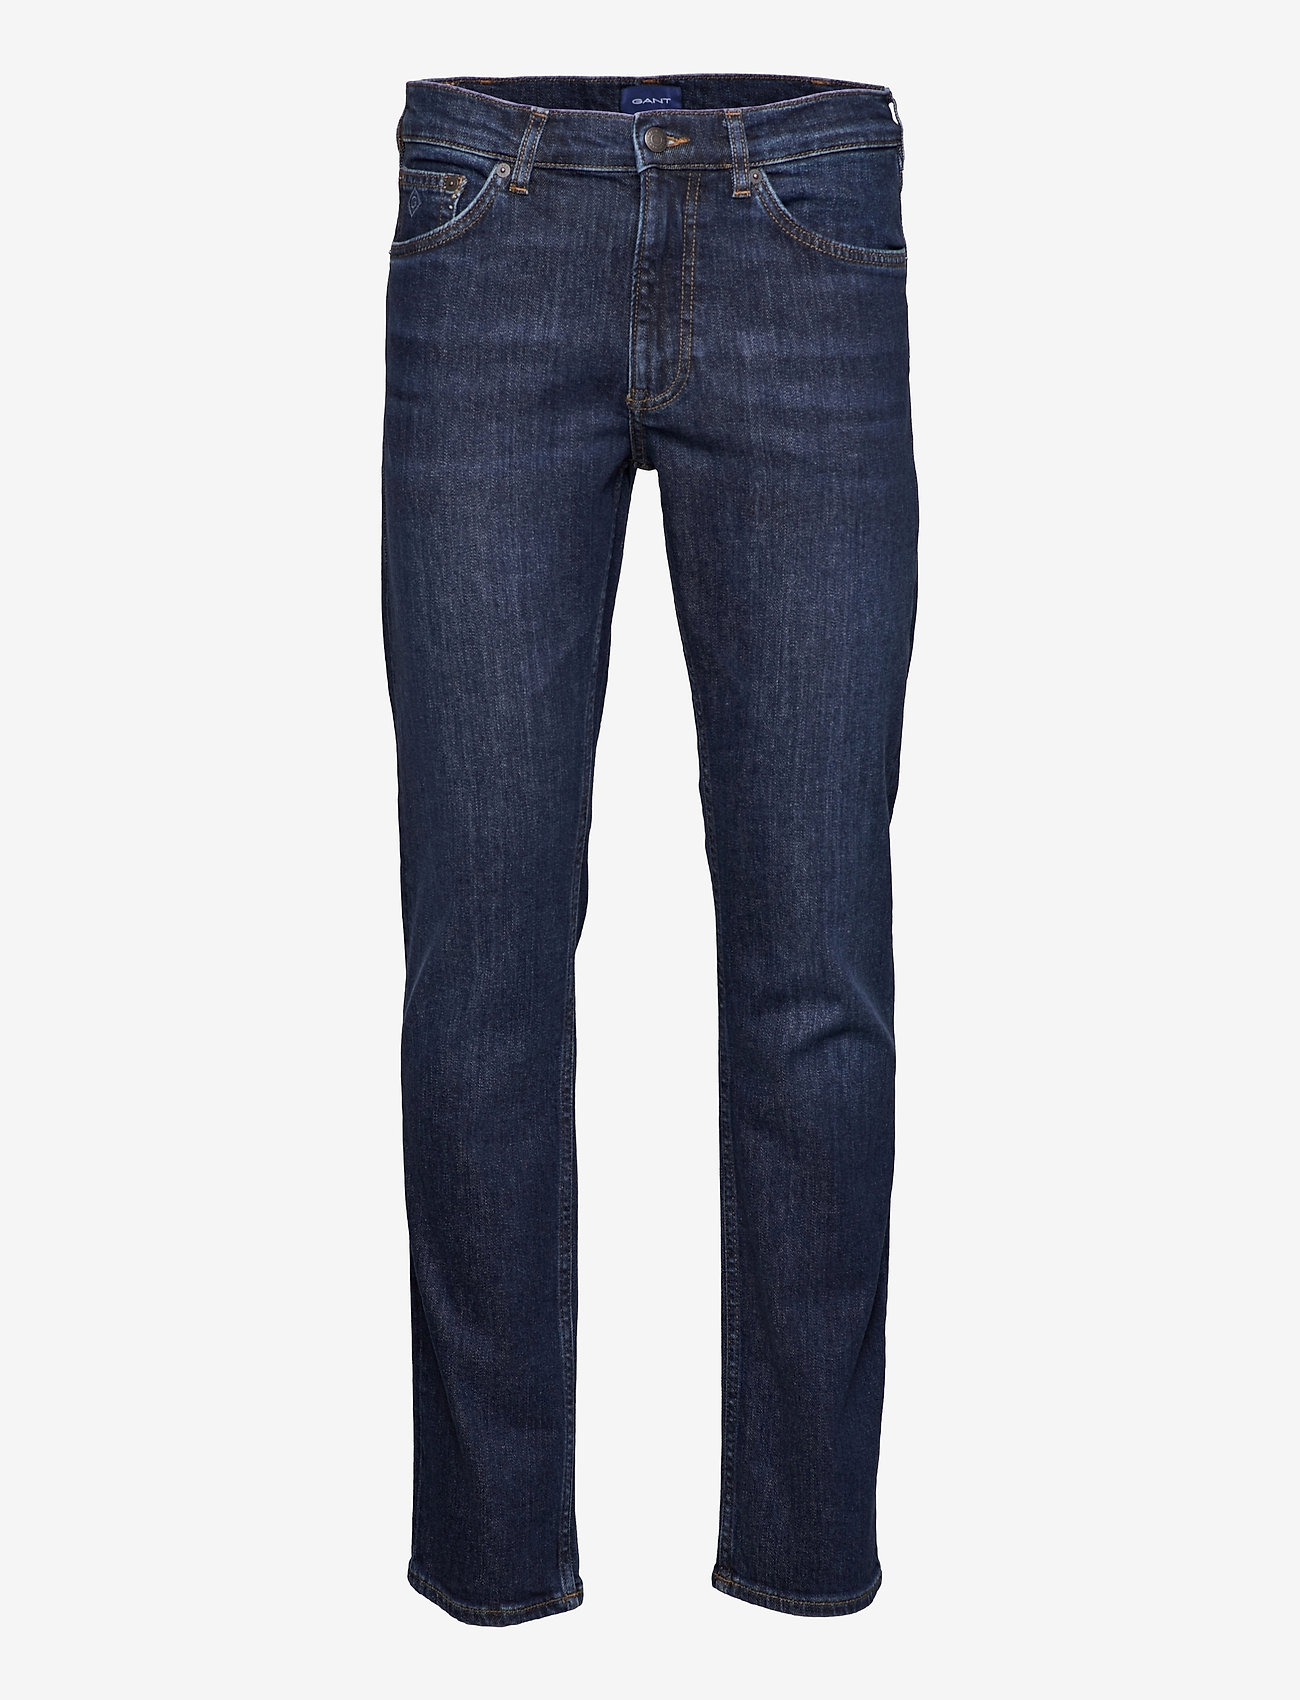 GANT - ARLEY GANT JEANS - regular jeans - dark blue worn in - 0